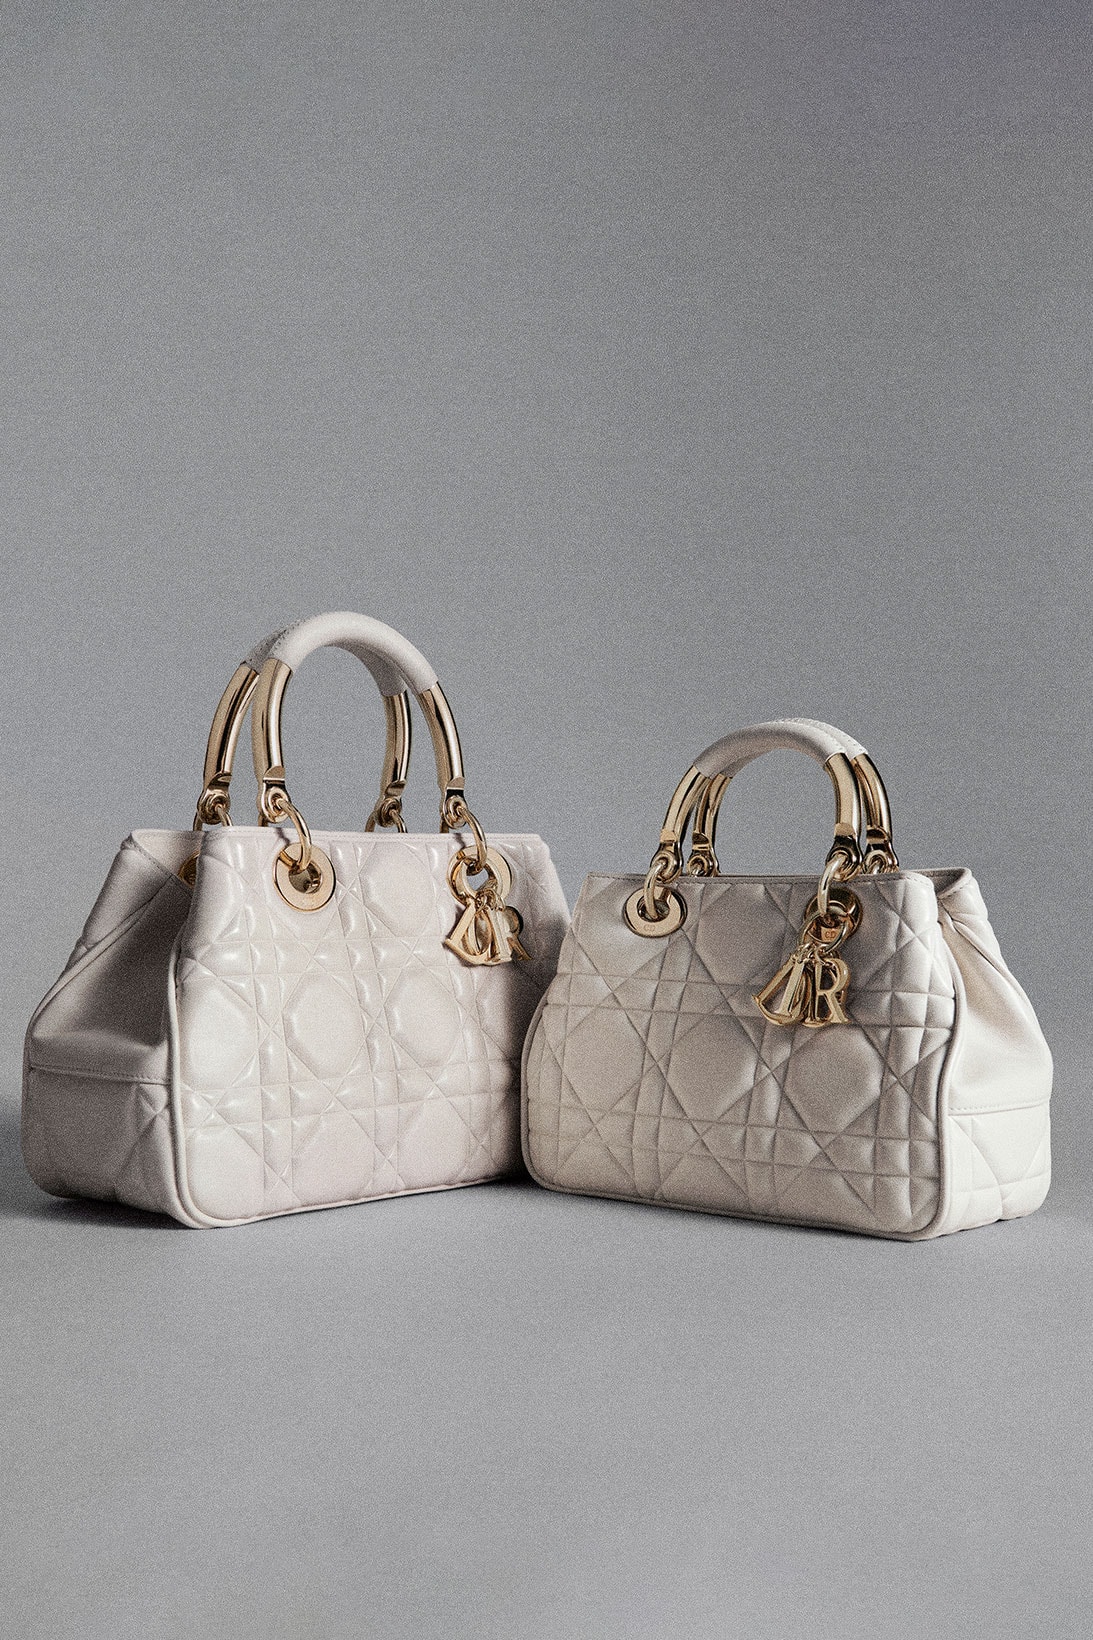 Lady Dior Bag Price List Guide - Brands Blogger